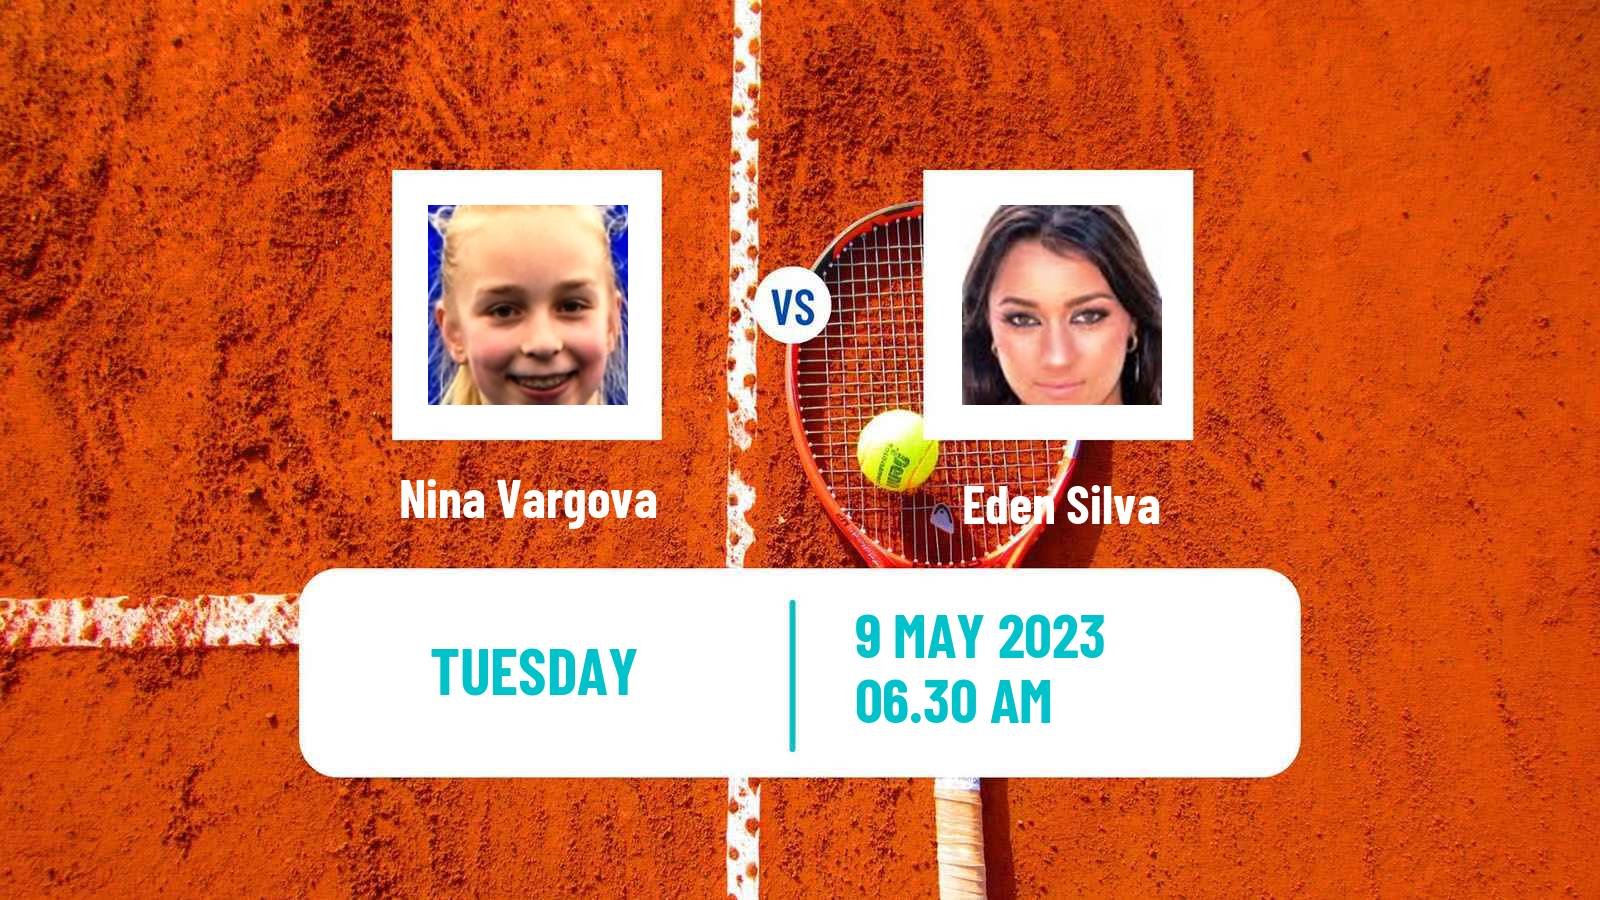 Tennis ITF Tournaments Nina Vargova - Eden Silva